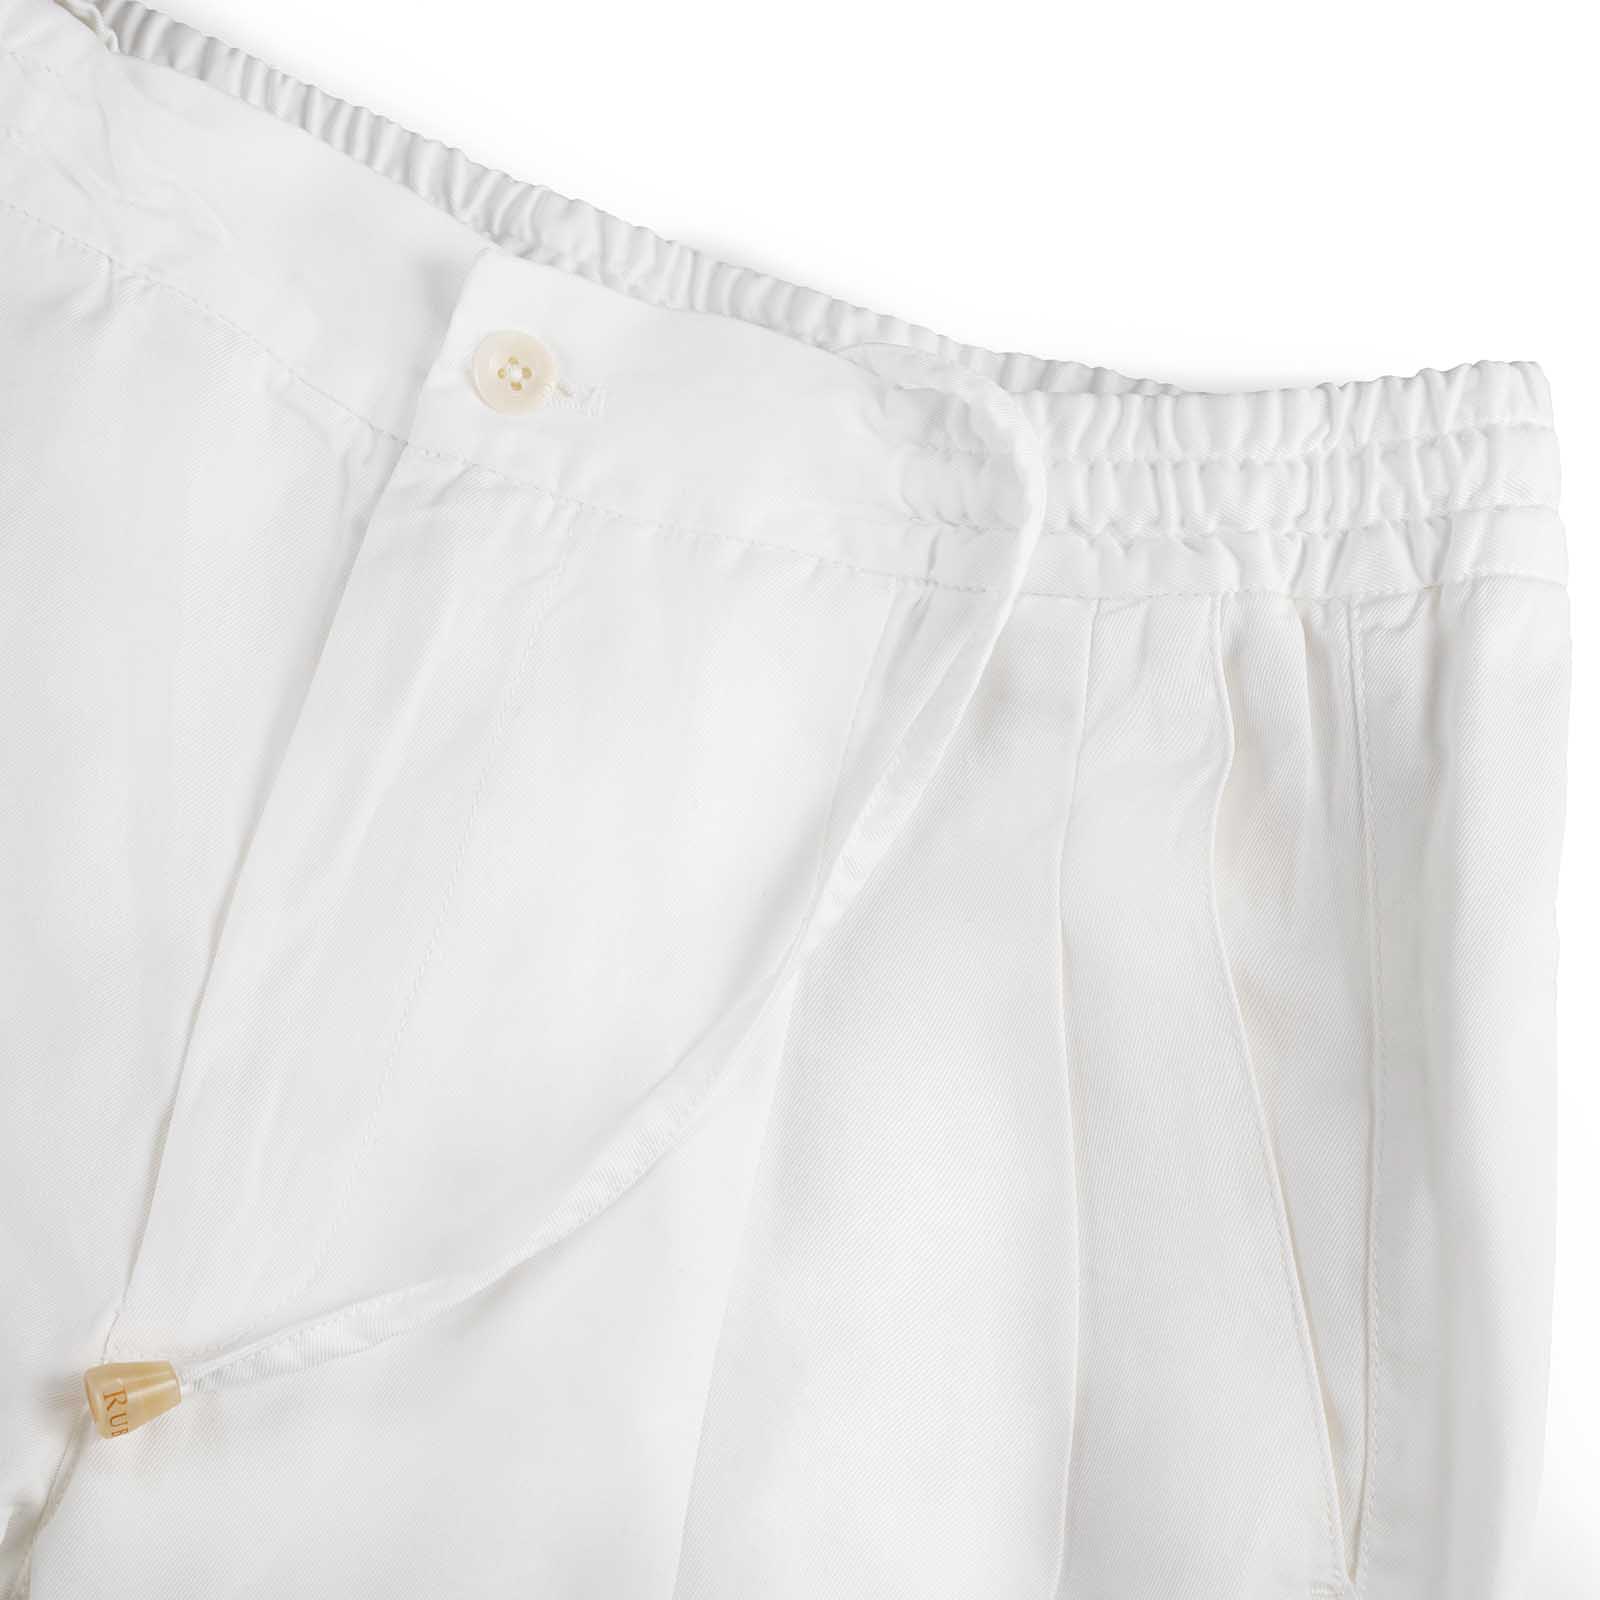 Mariano Rubinacci - White cotton leisure pants